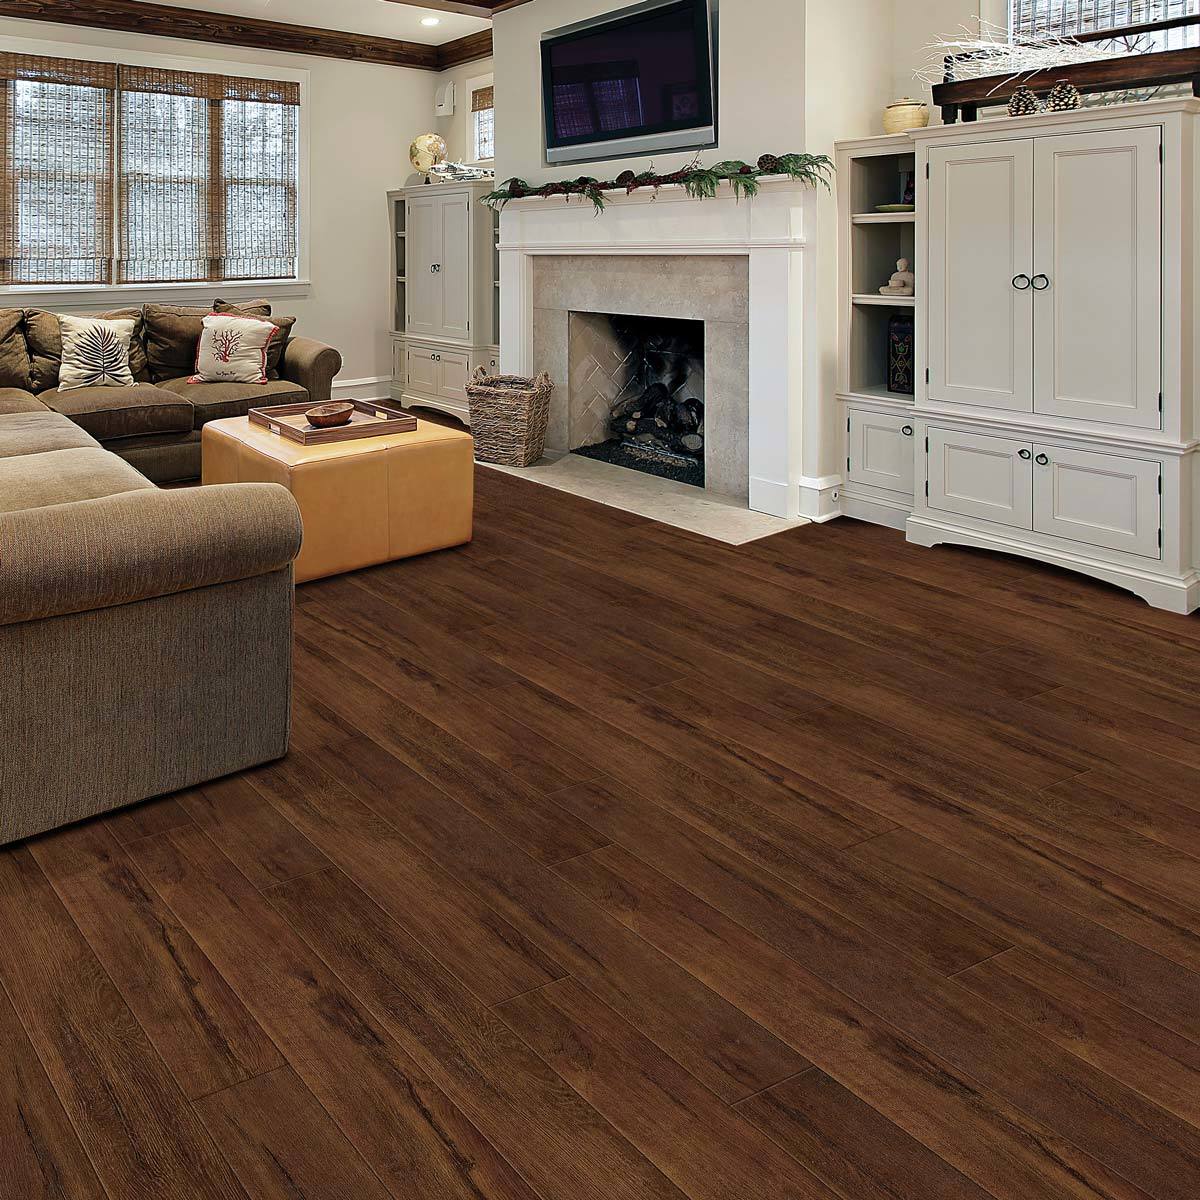 Golden Select Highland Brown Oak Laminate Flooring With Foam Underlay 1 16 M Per Pack Costco Uk